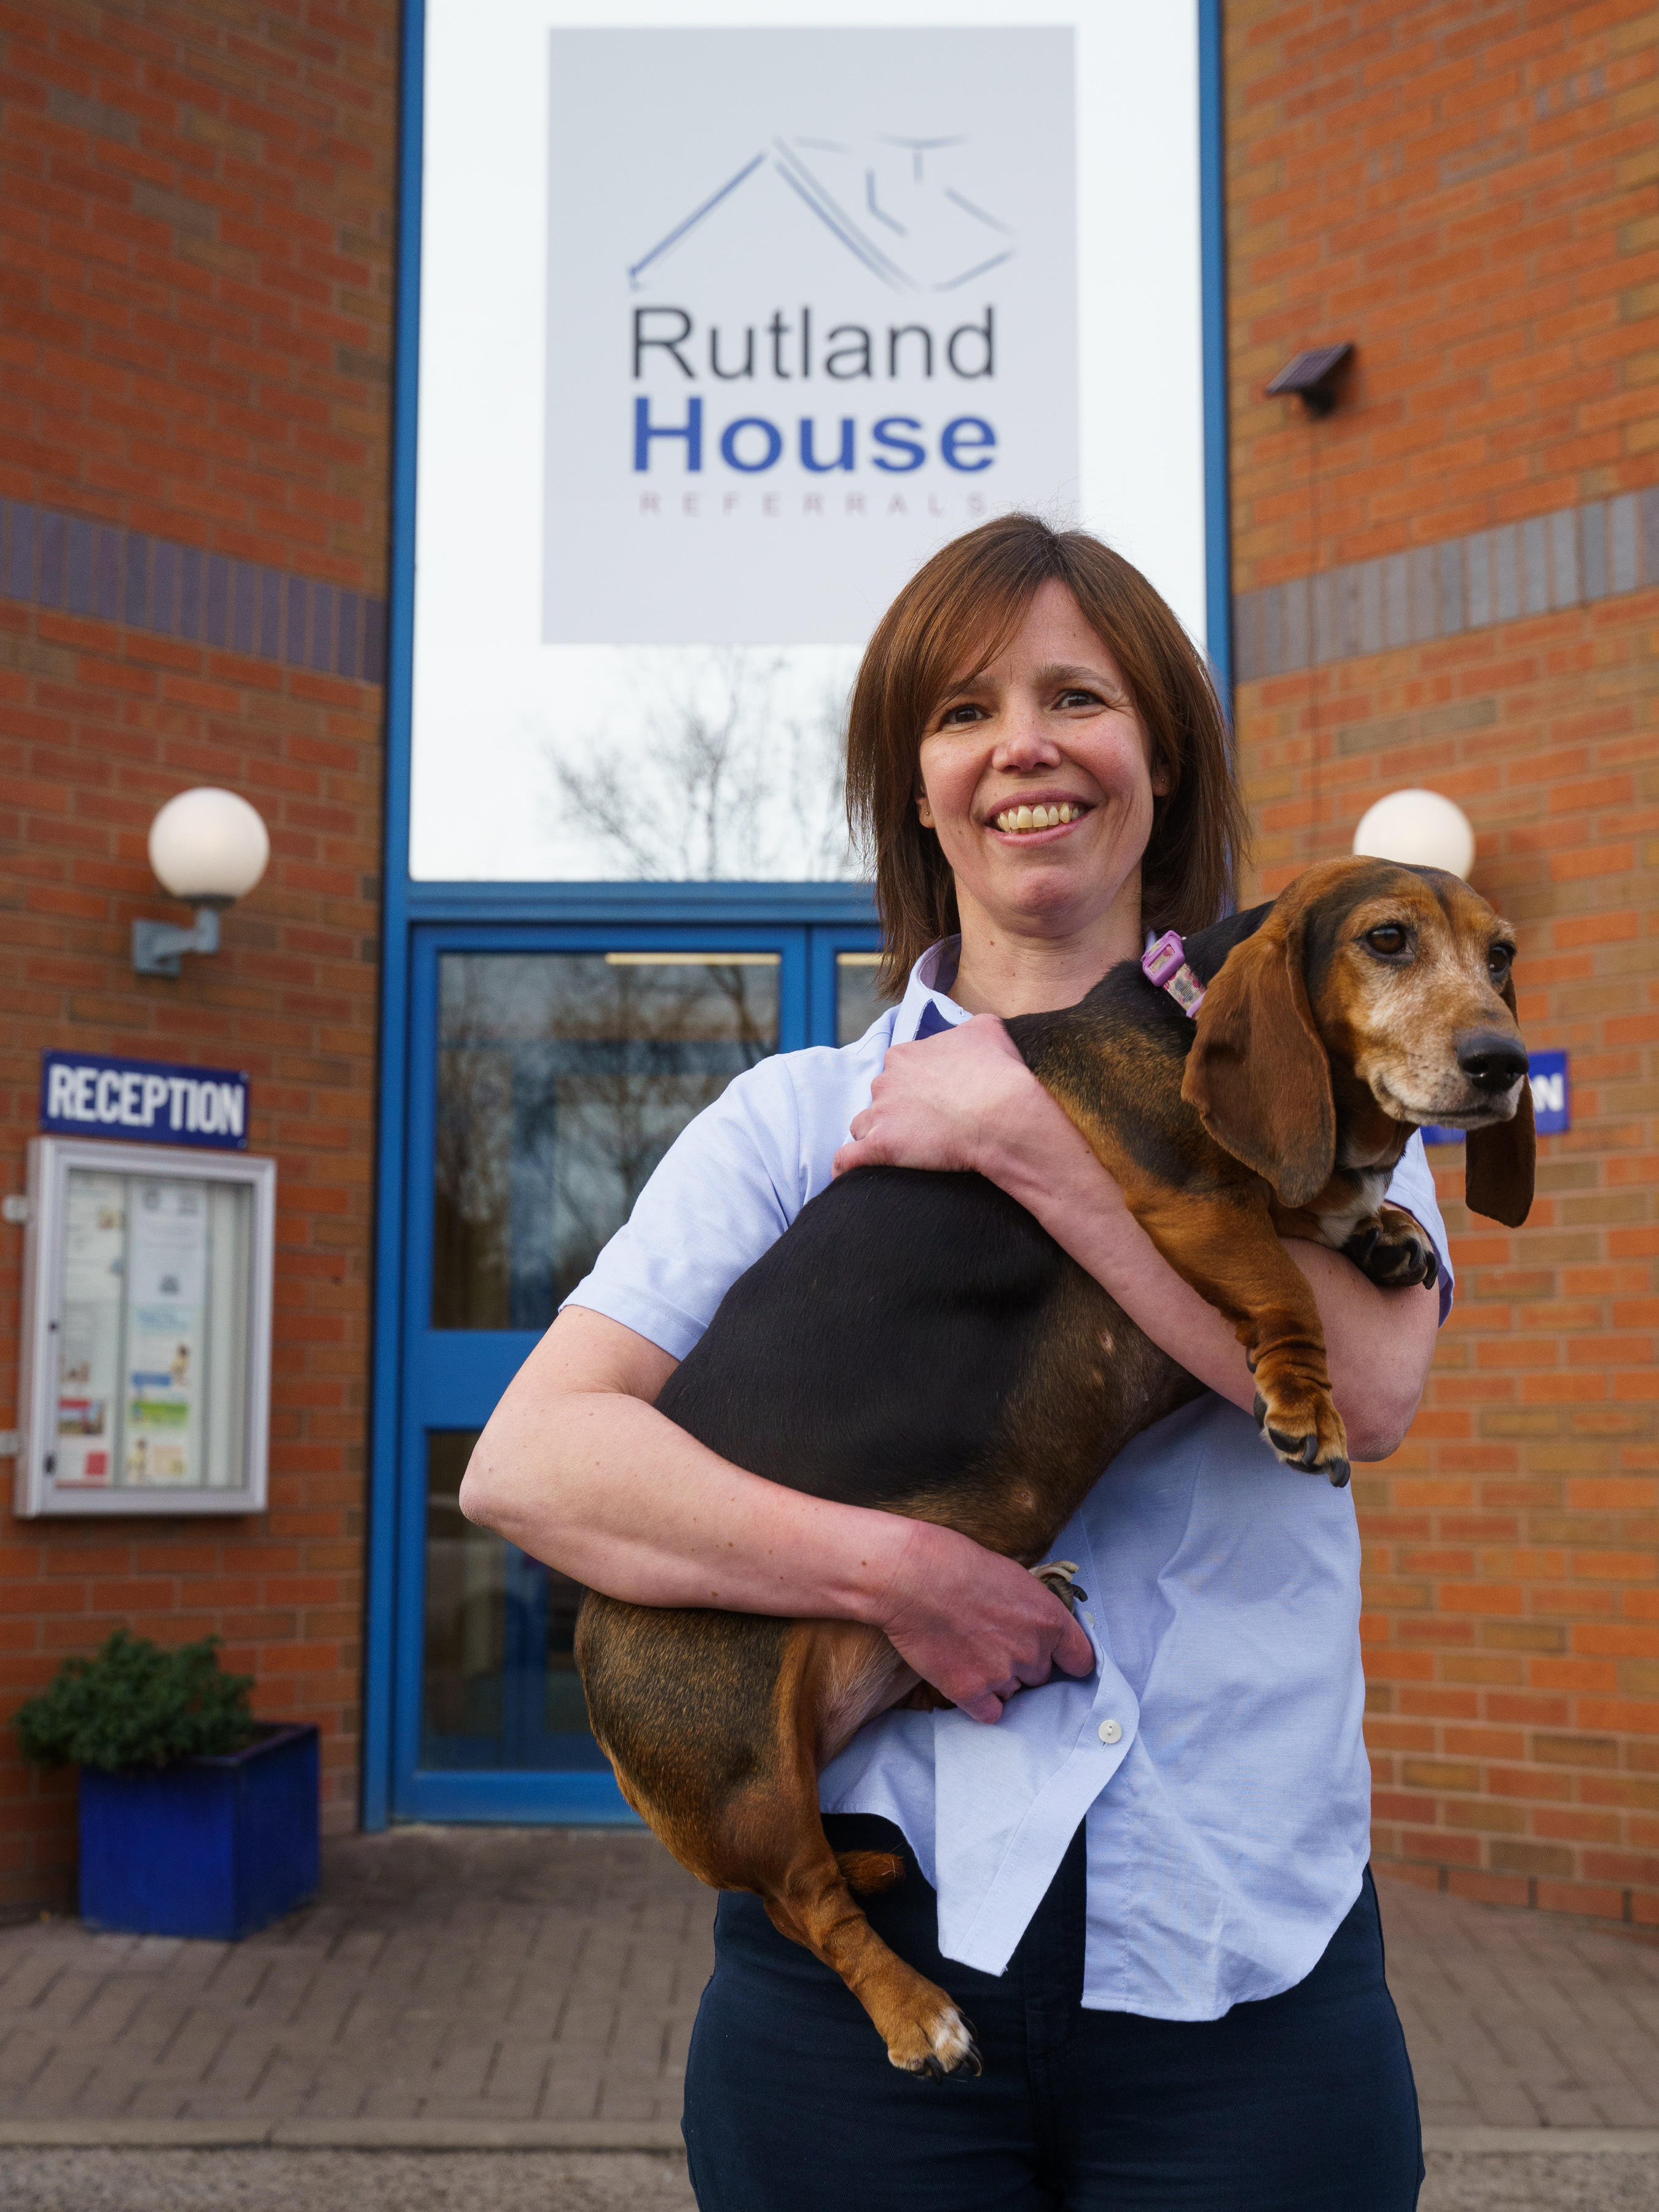 Rutland House Veterinary Hospital Saint Helens 01744 853520